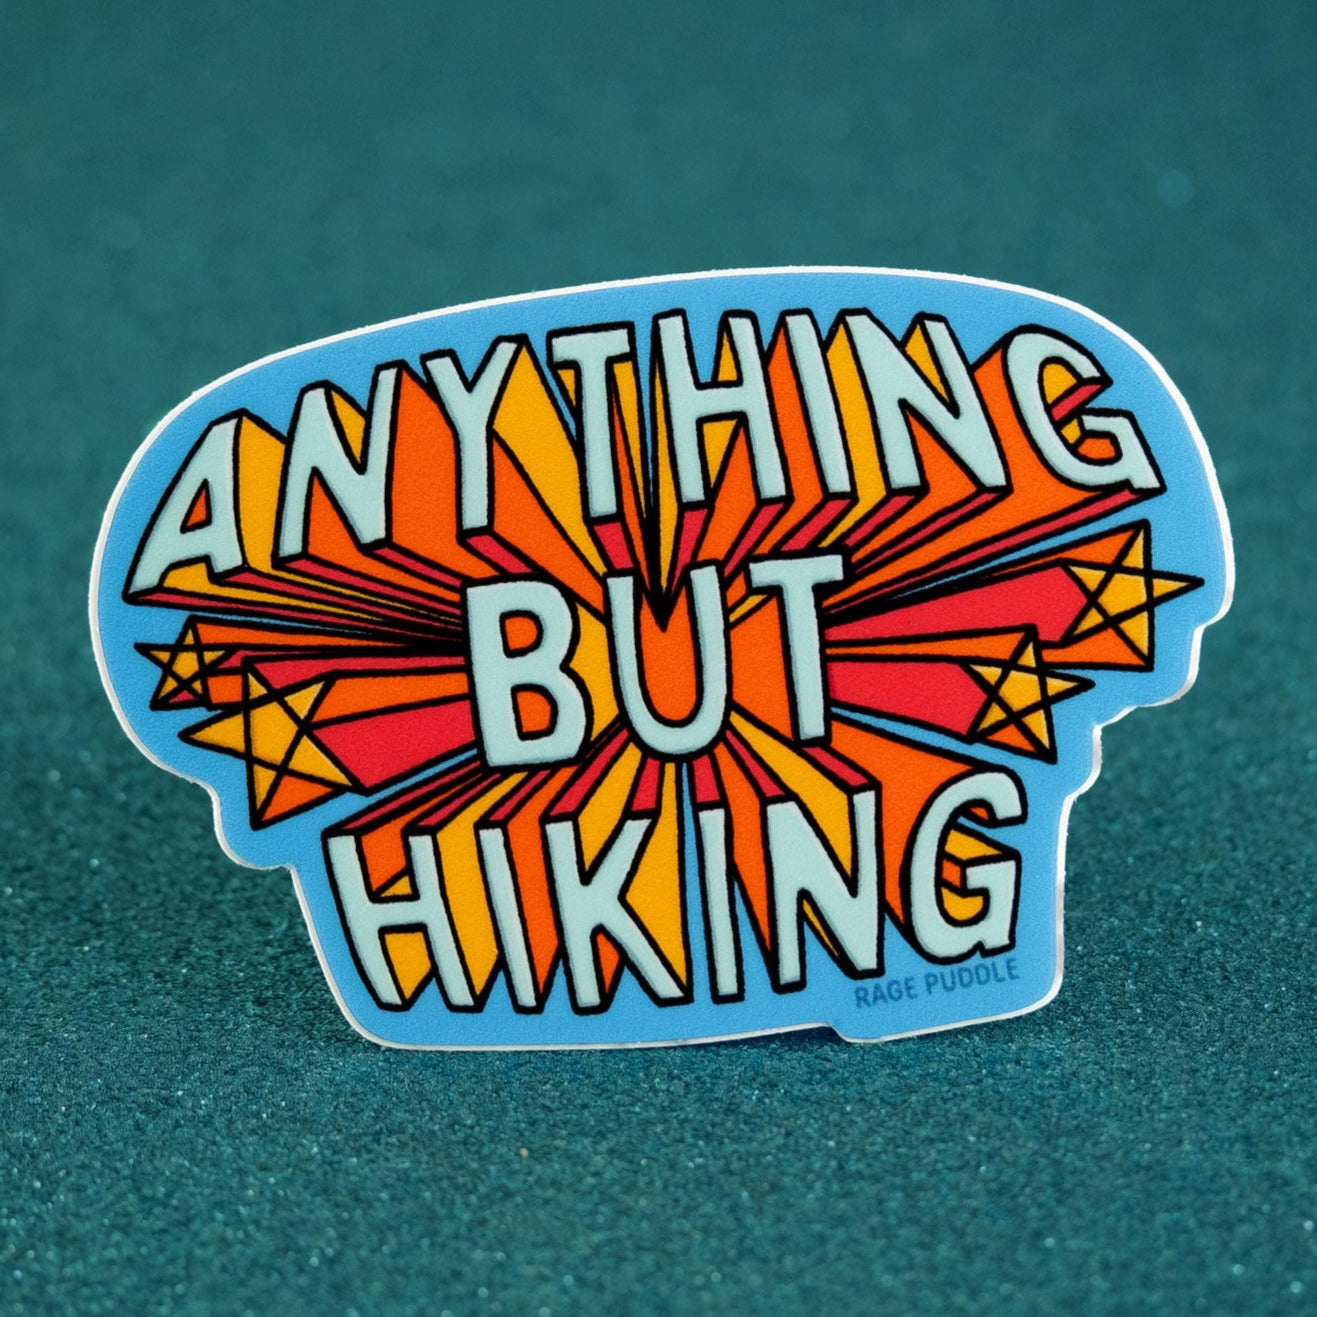 Anything But Hiking Vinyl Sticker